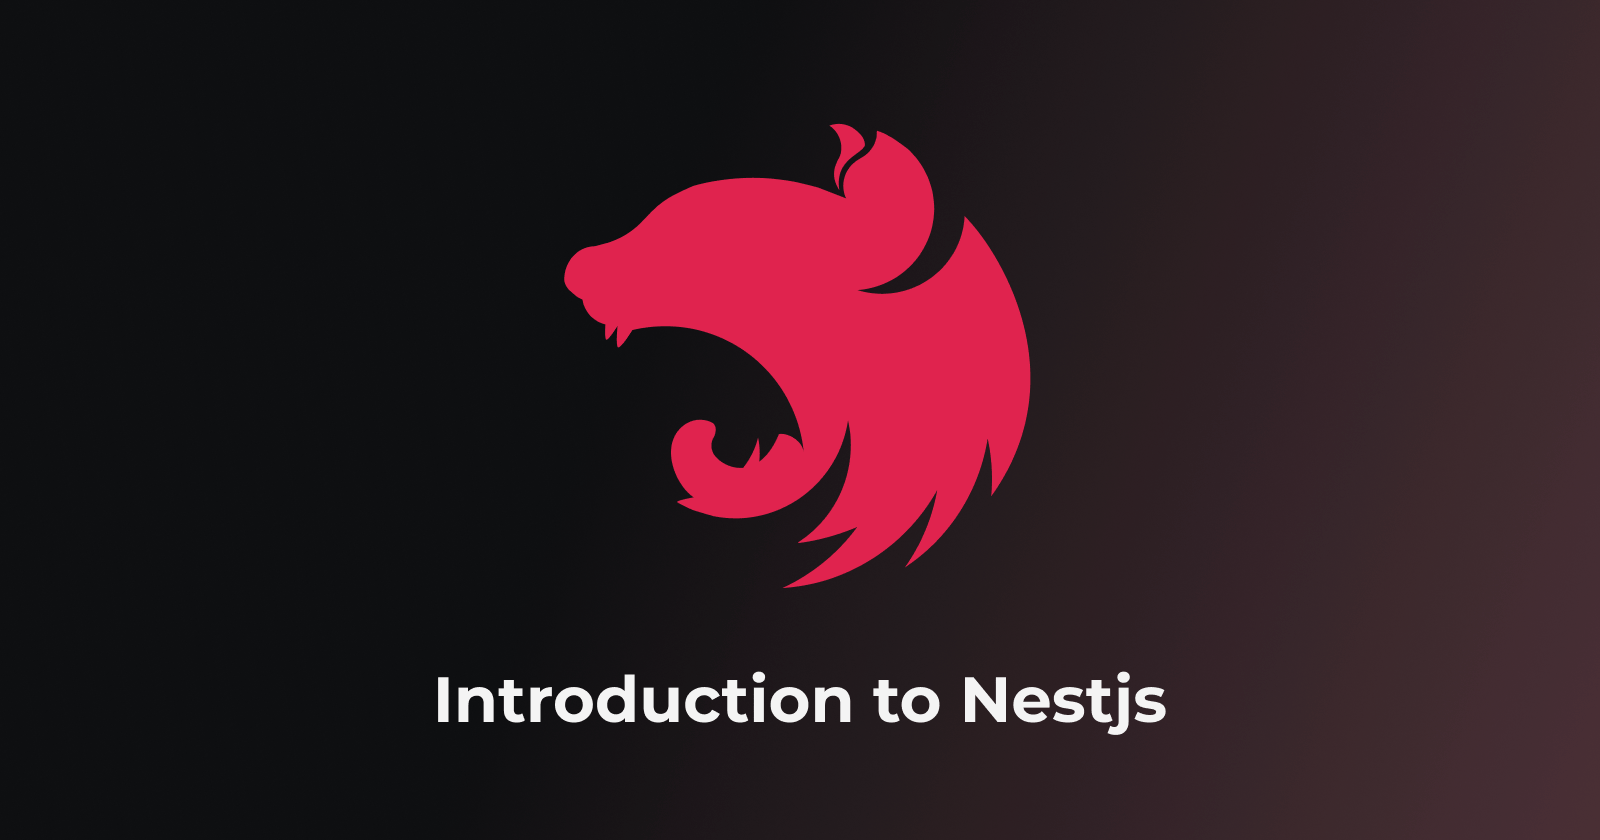 Introduction to Nestjs